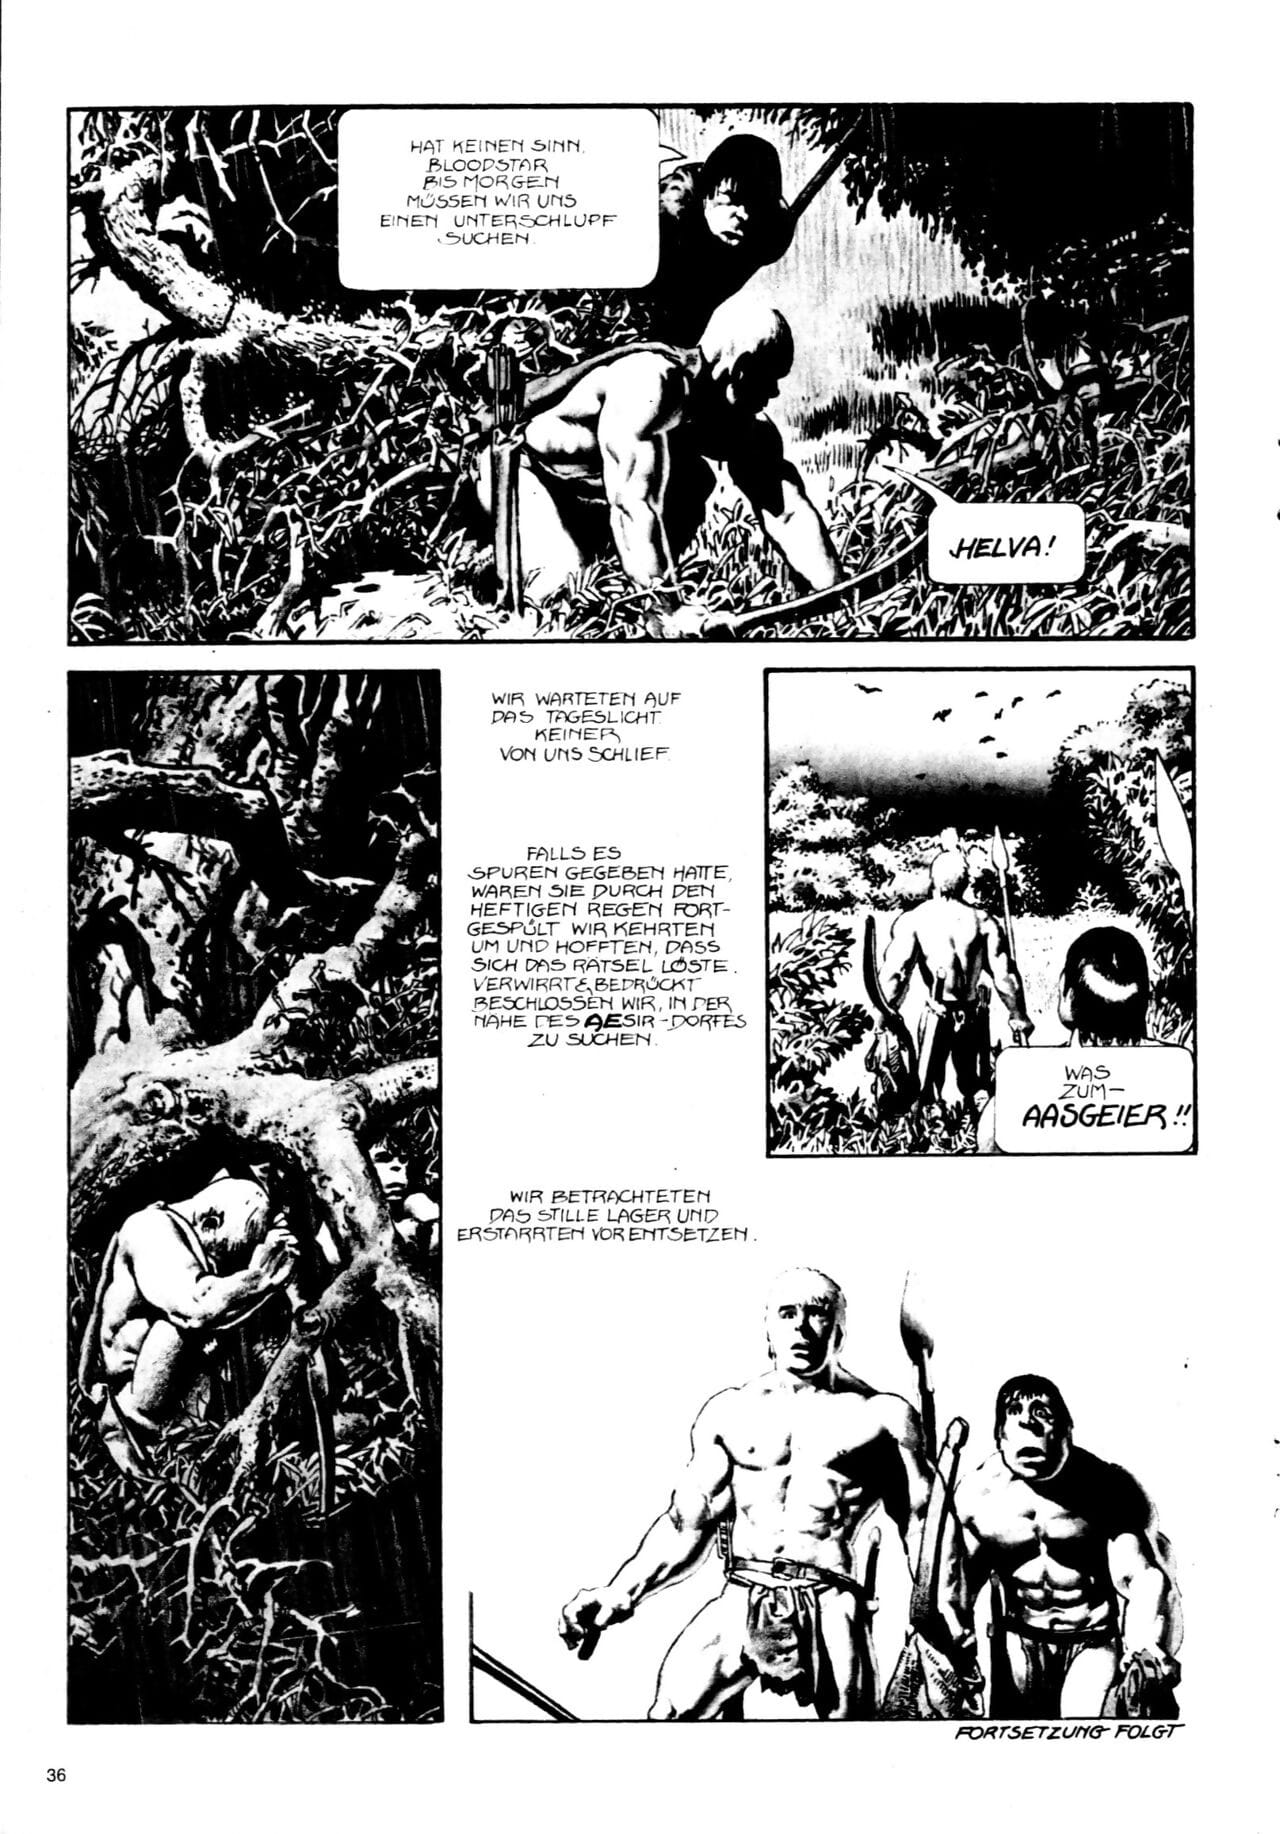 schwermetall #006 page 1